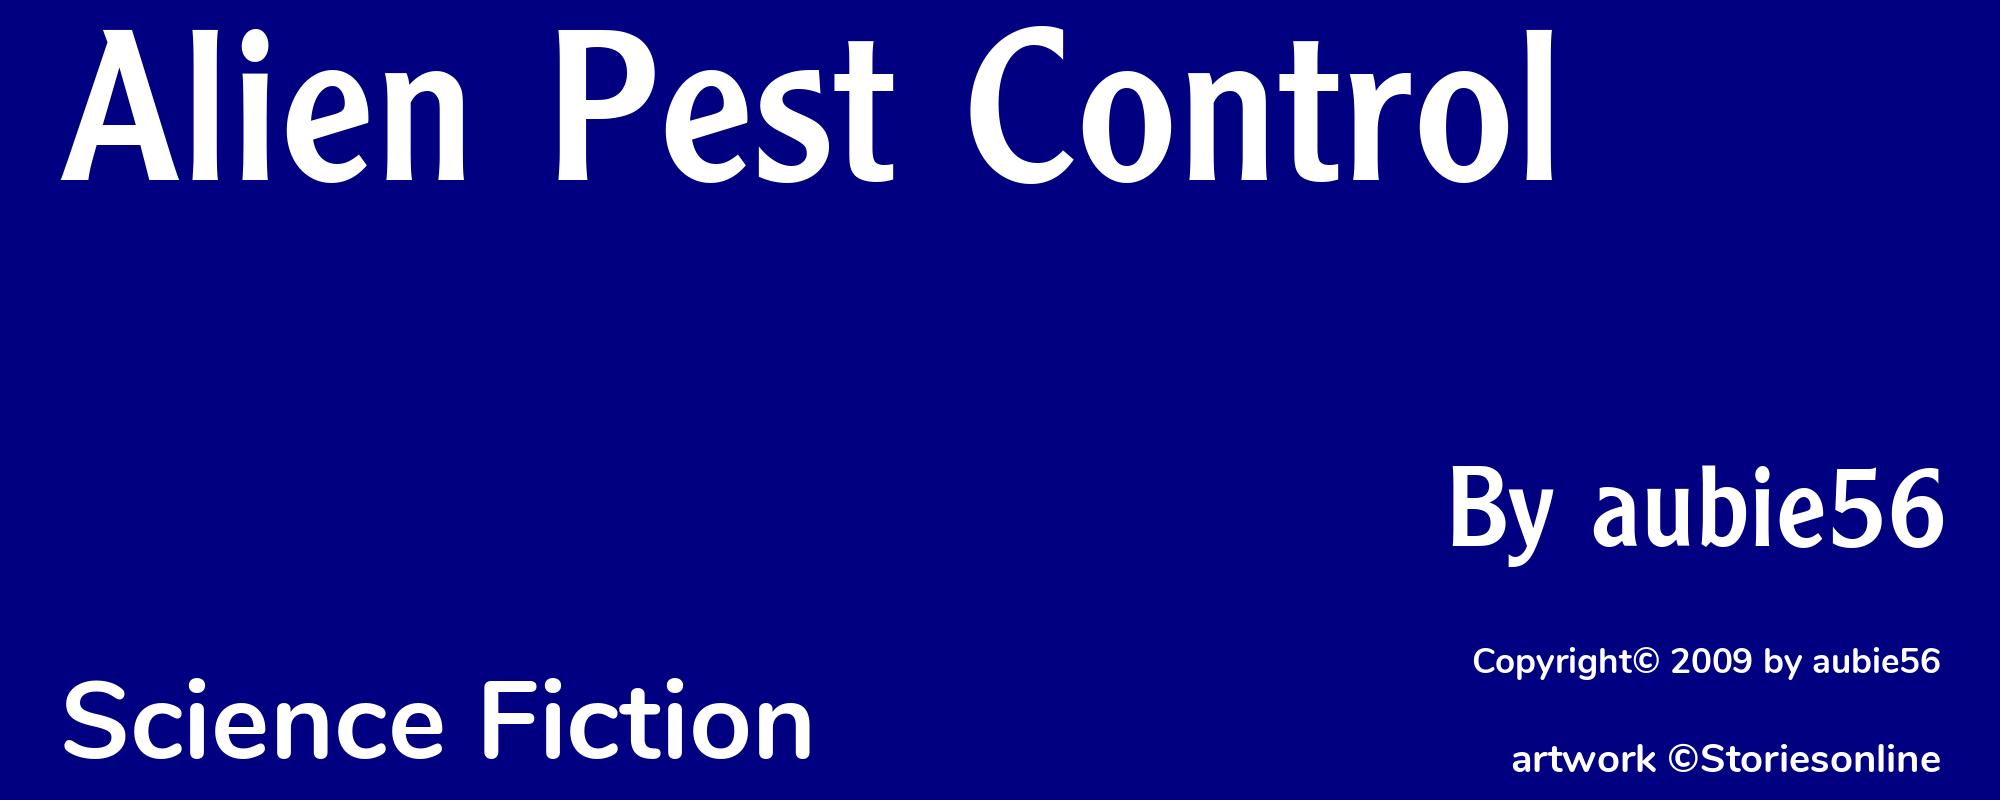 Alien Pest Control - Cover